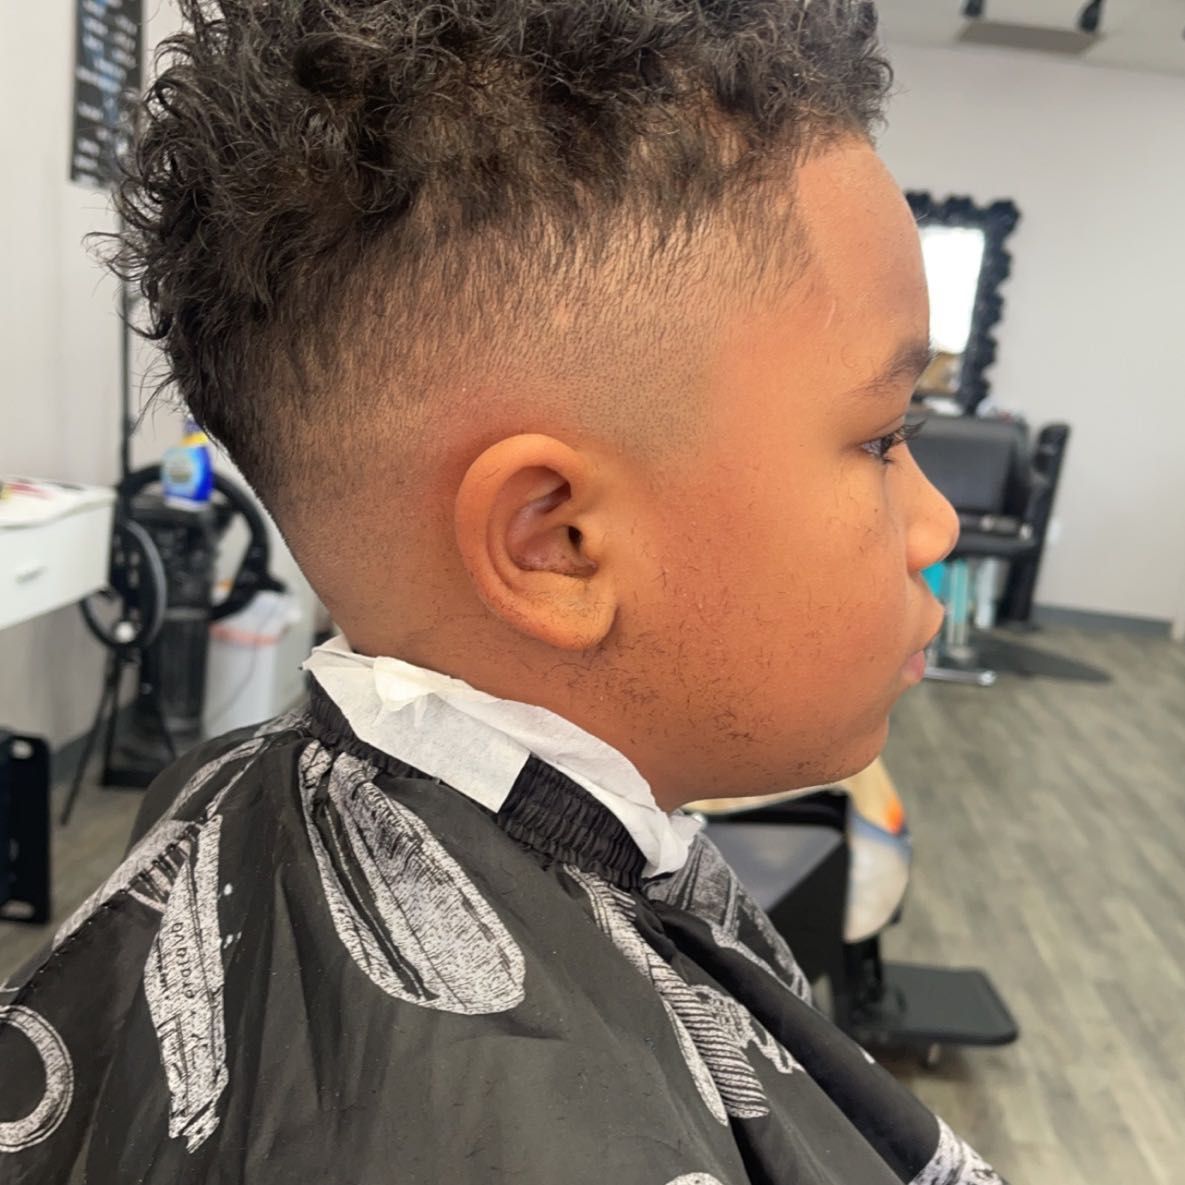 Kids Haircut (12 and under) portfolio